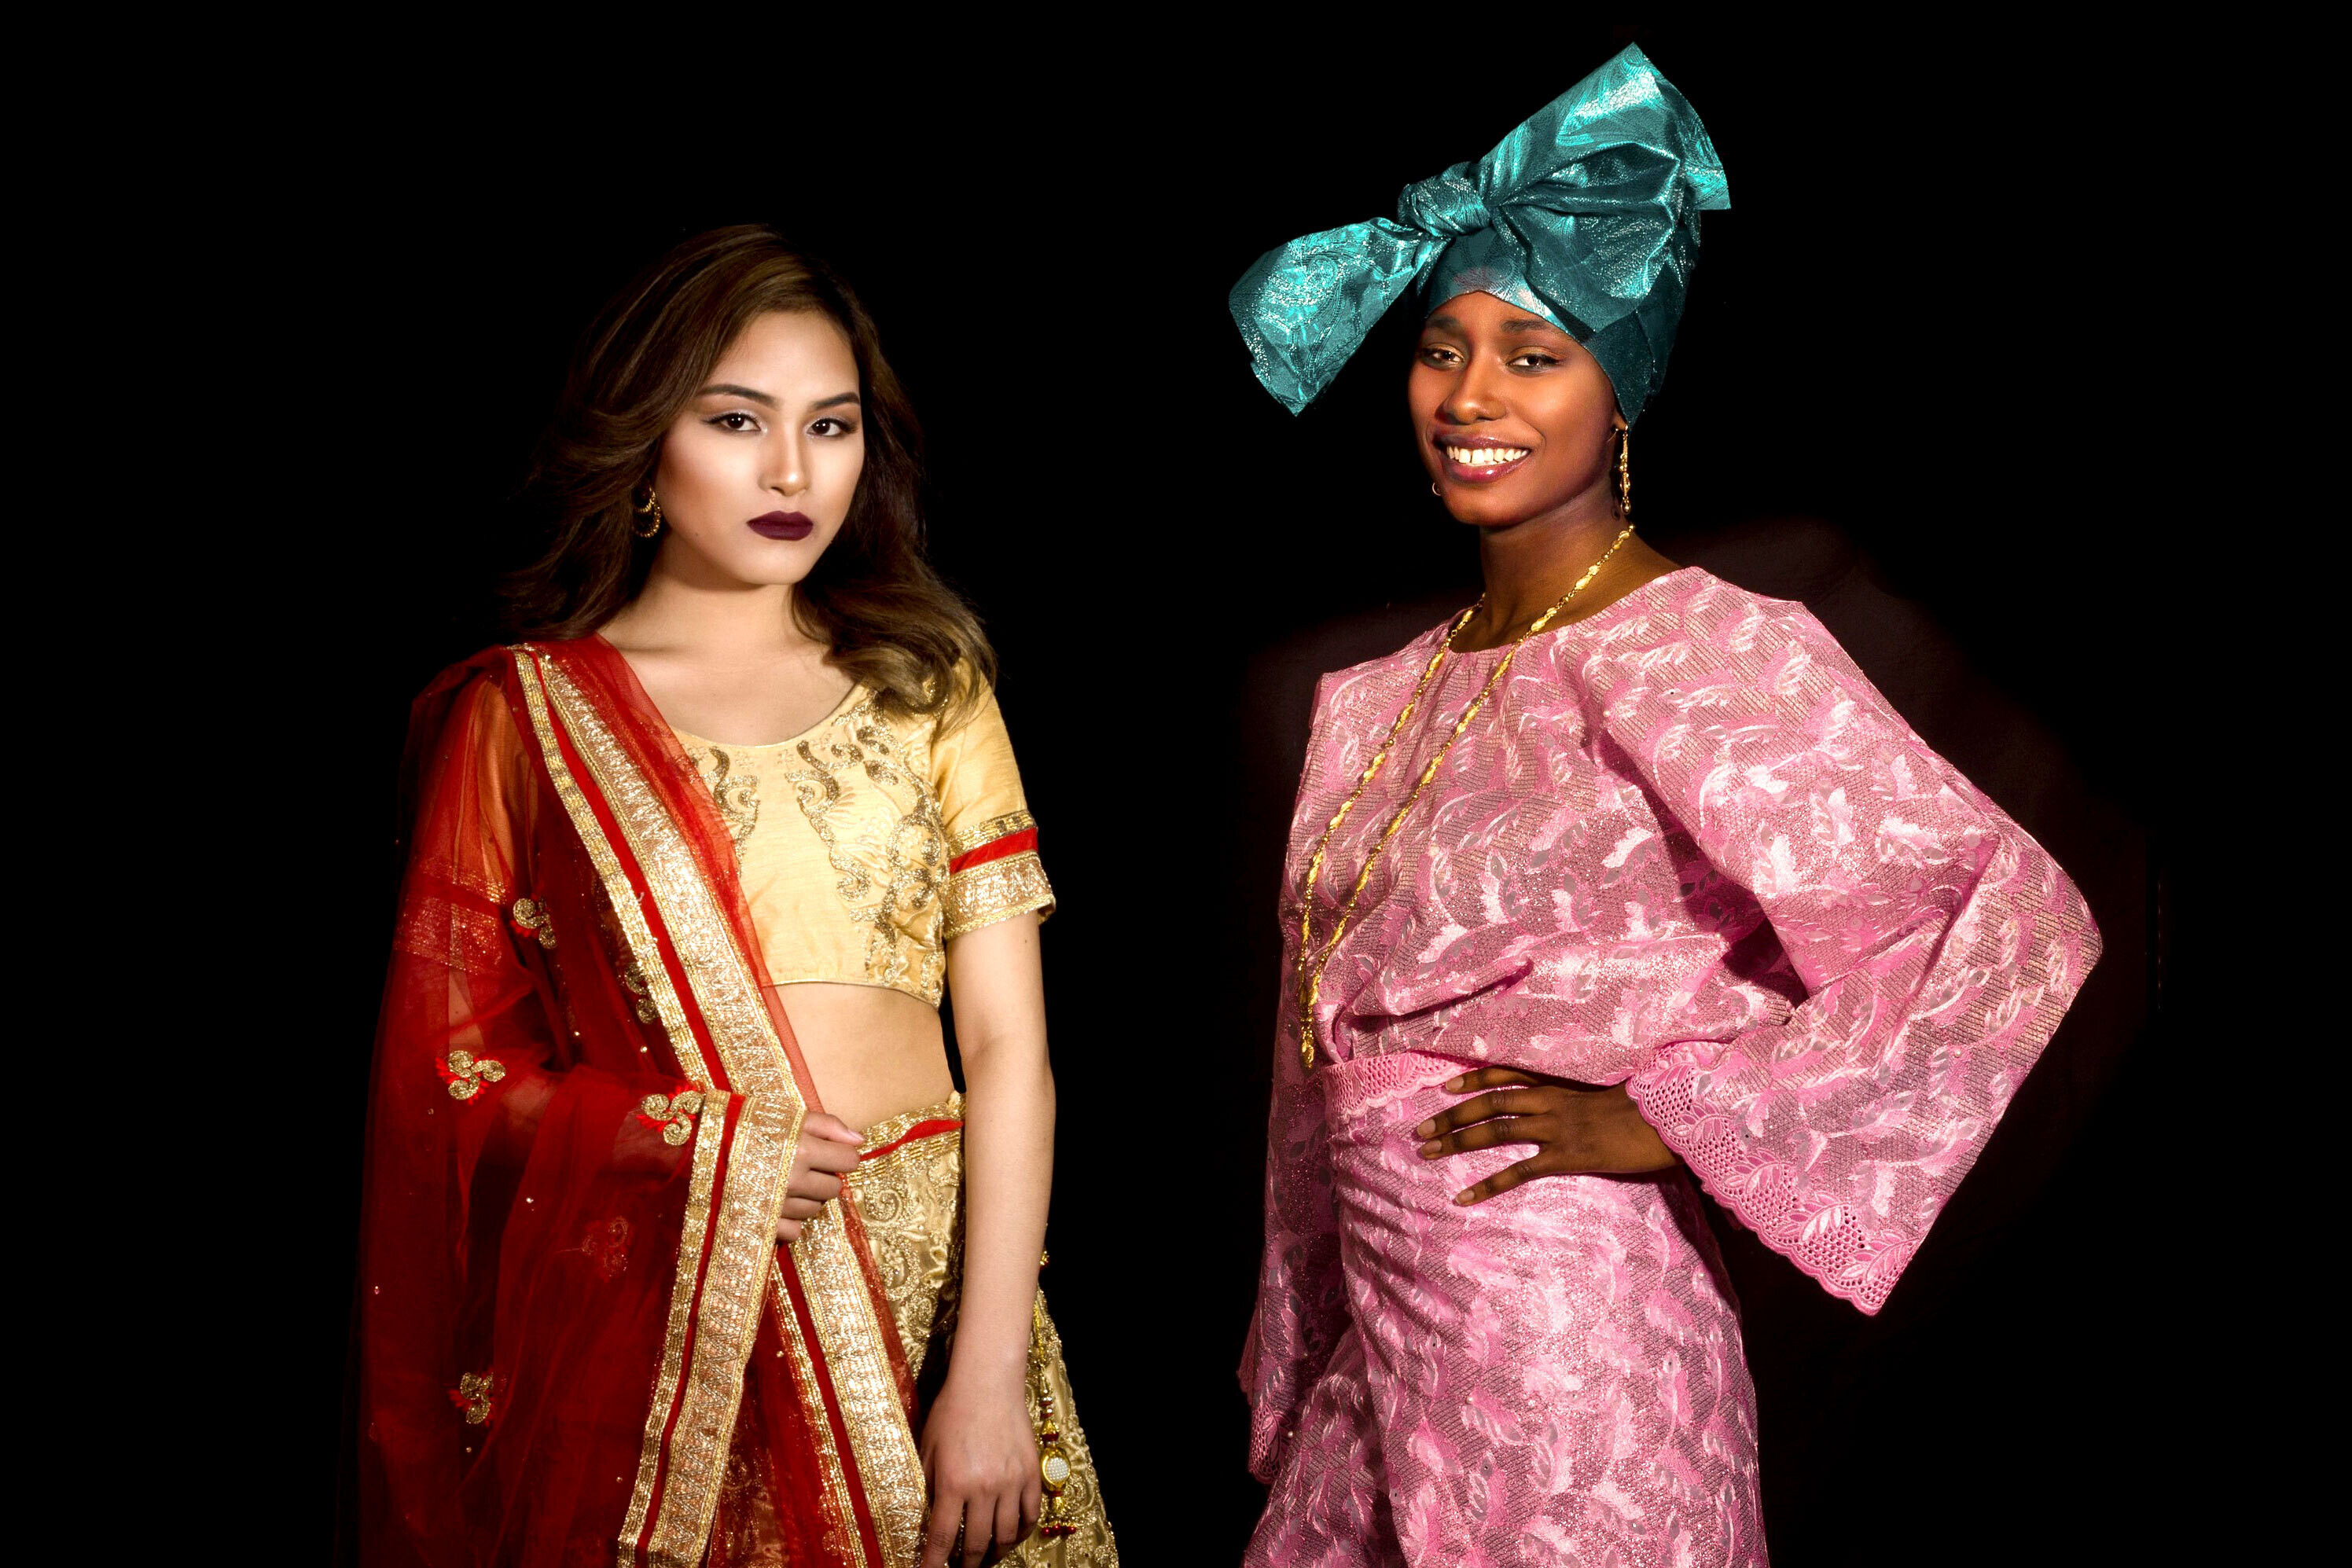 Two New American models from Karibu fashion show